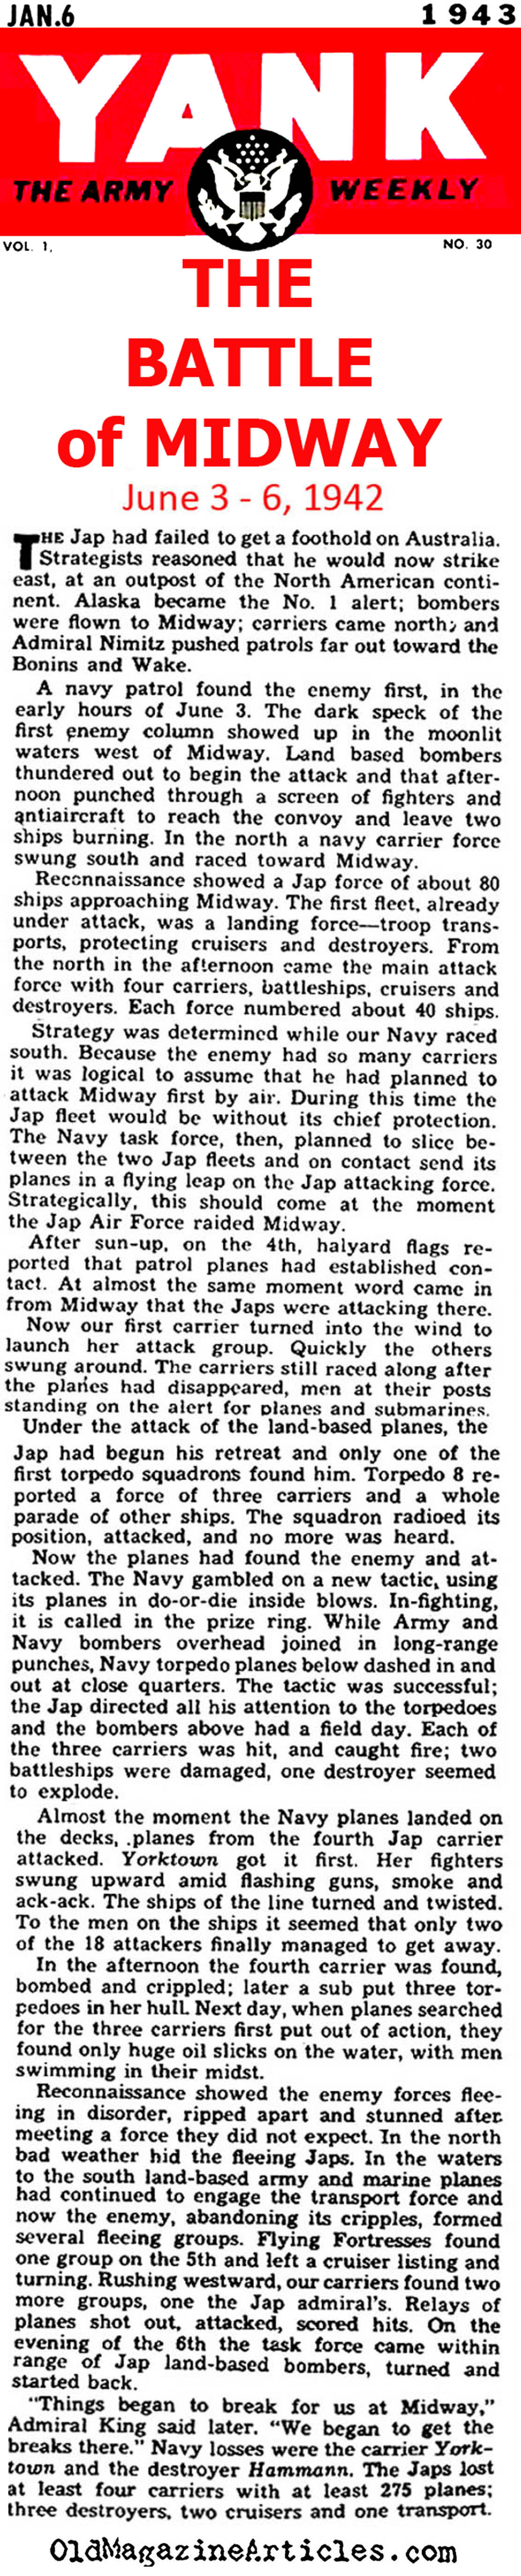 The Battle of Midway (Yank Magazine, 1943)